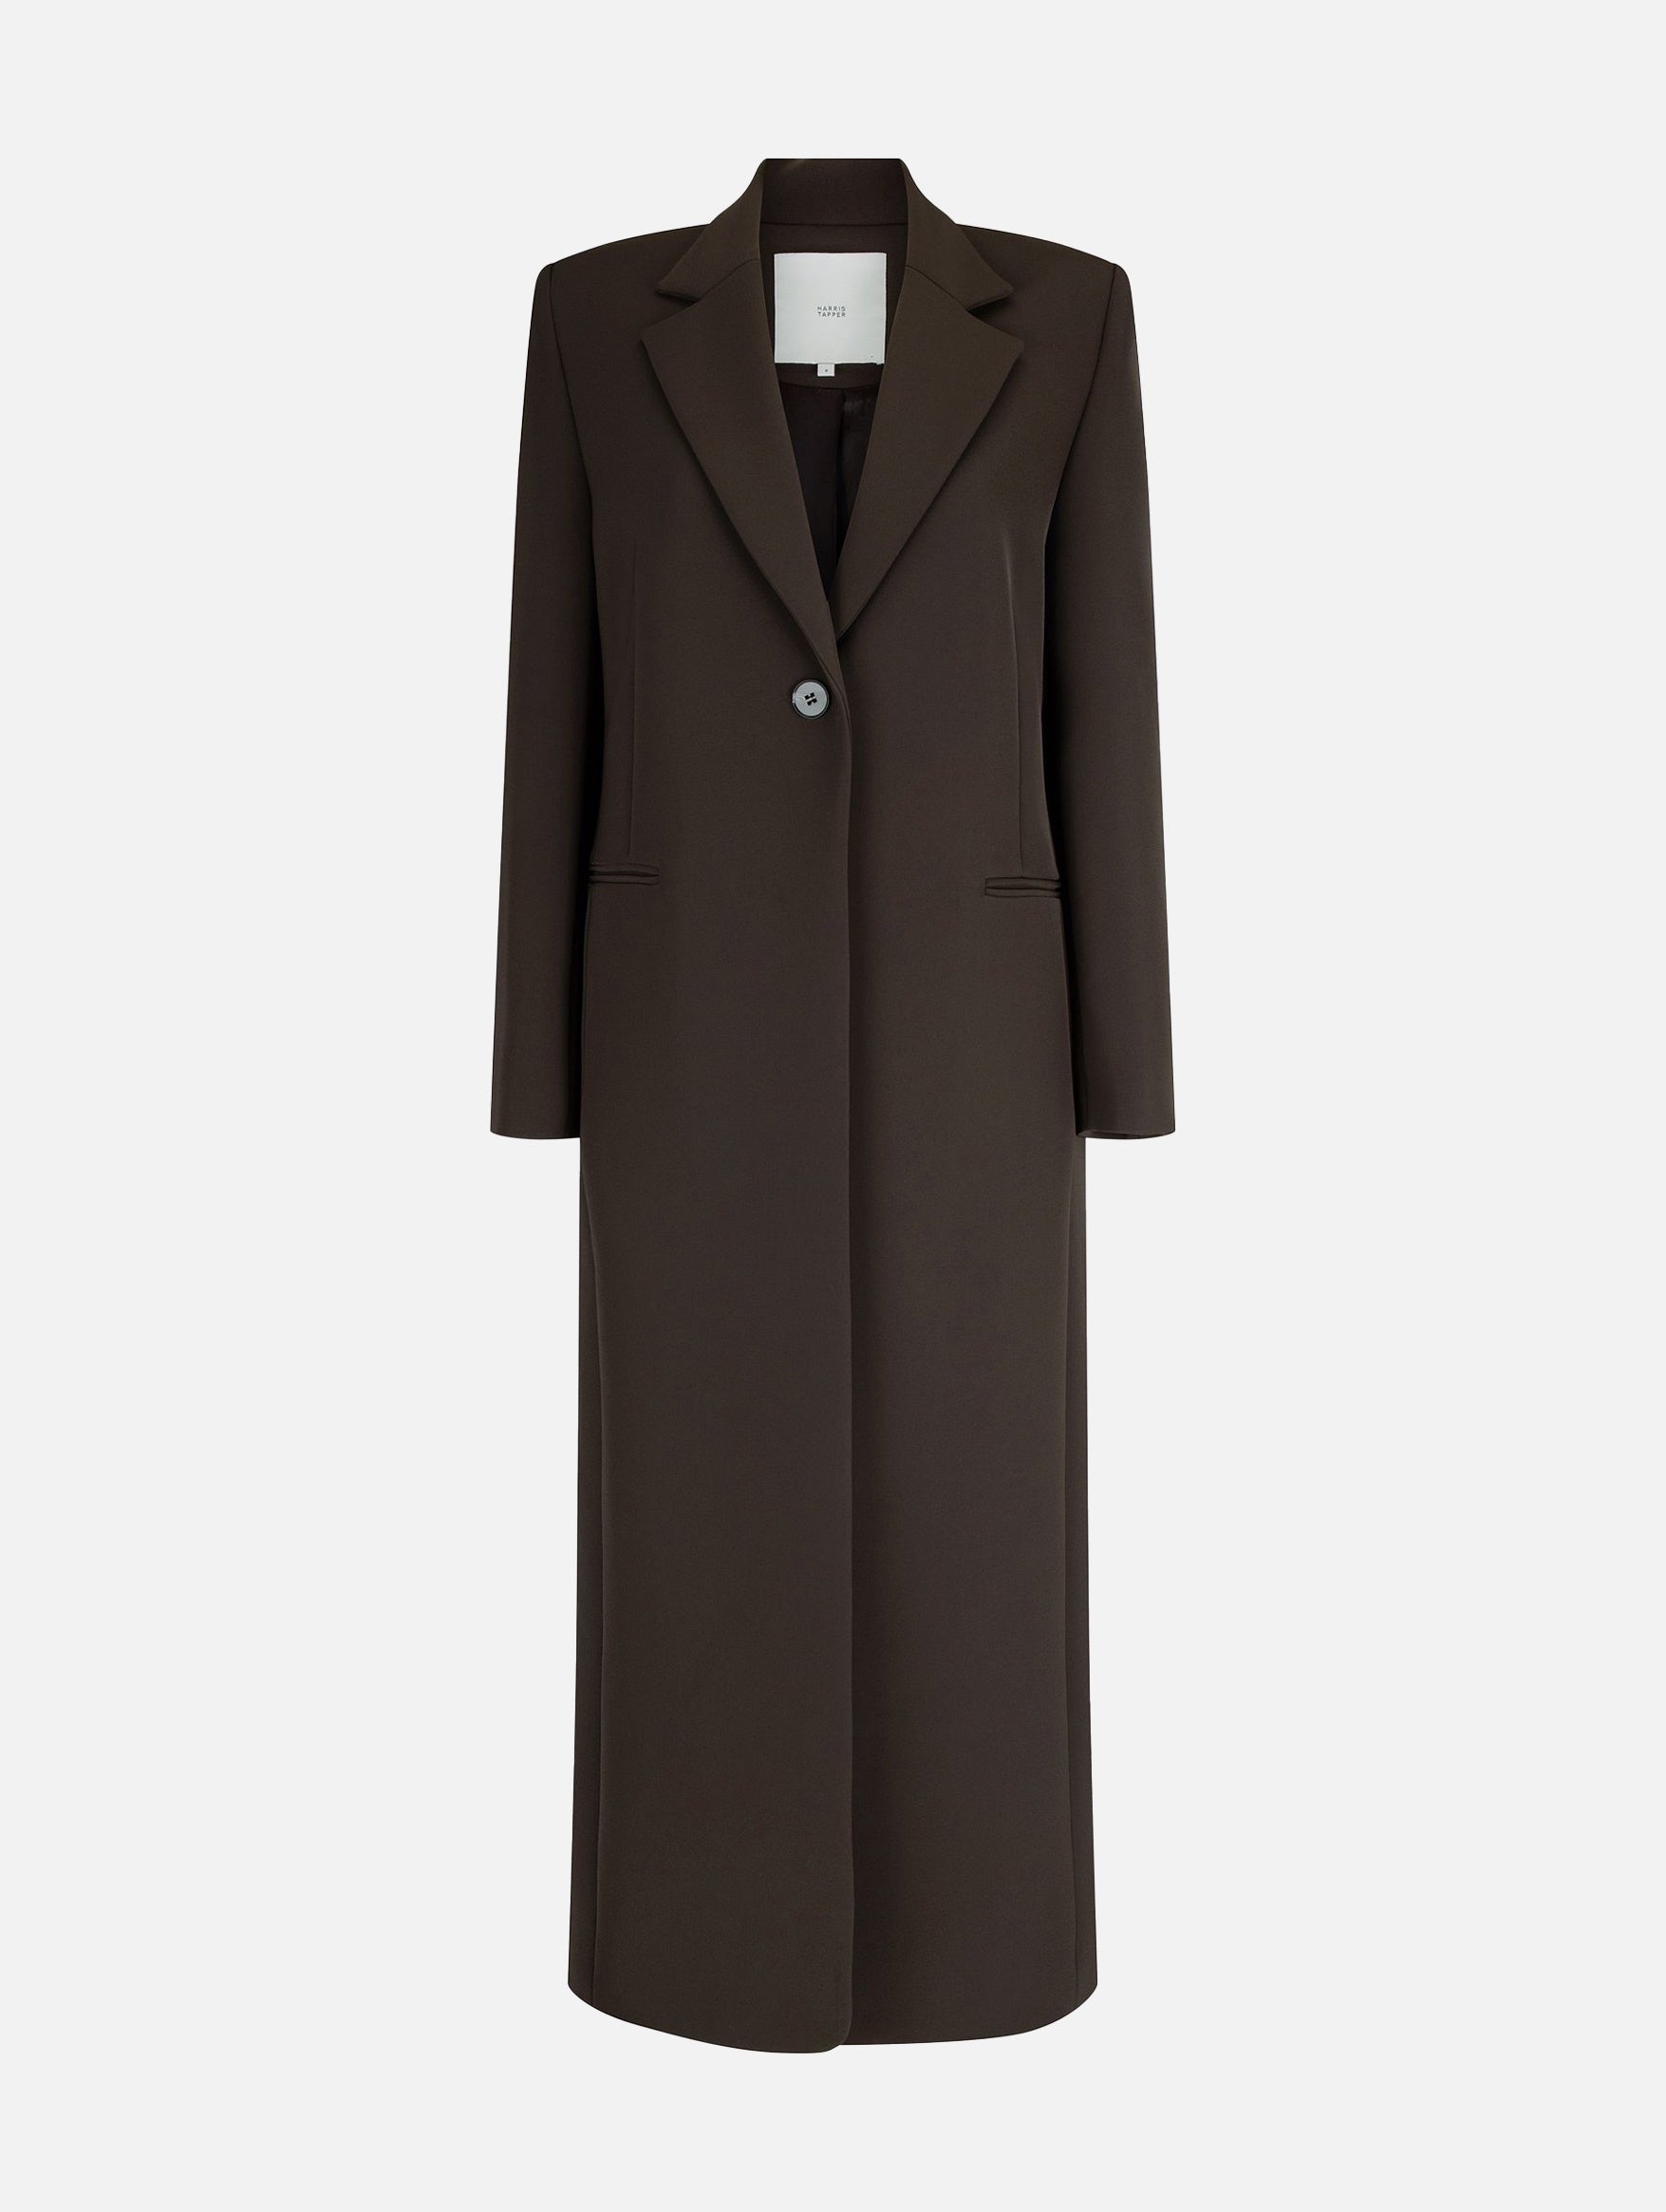 Tuxedo Coat in Umber